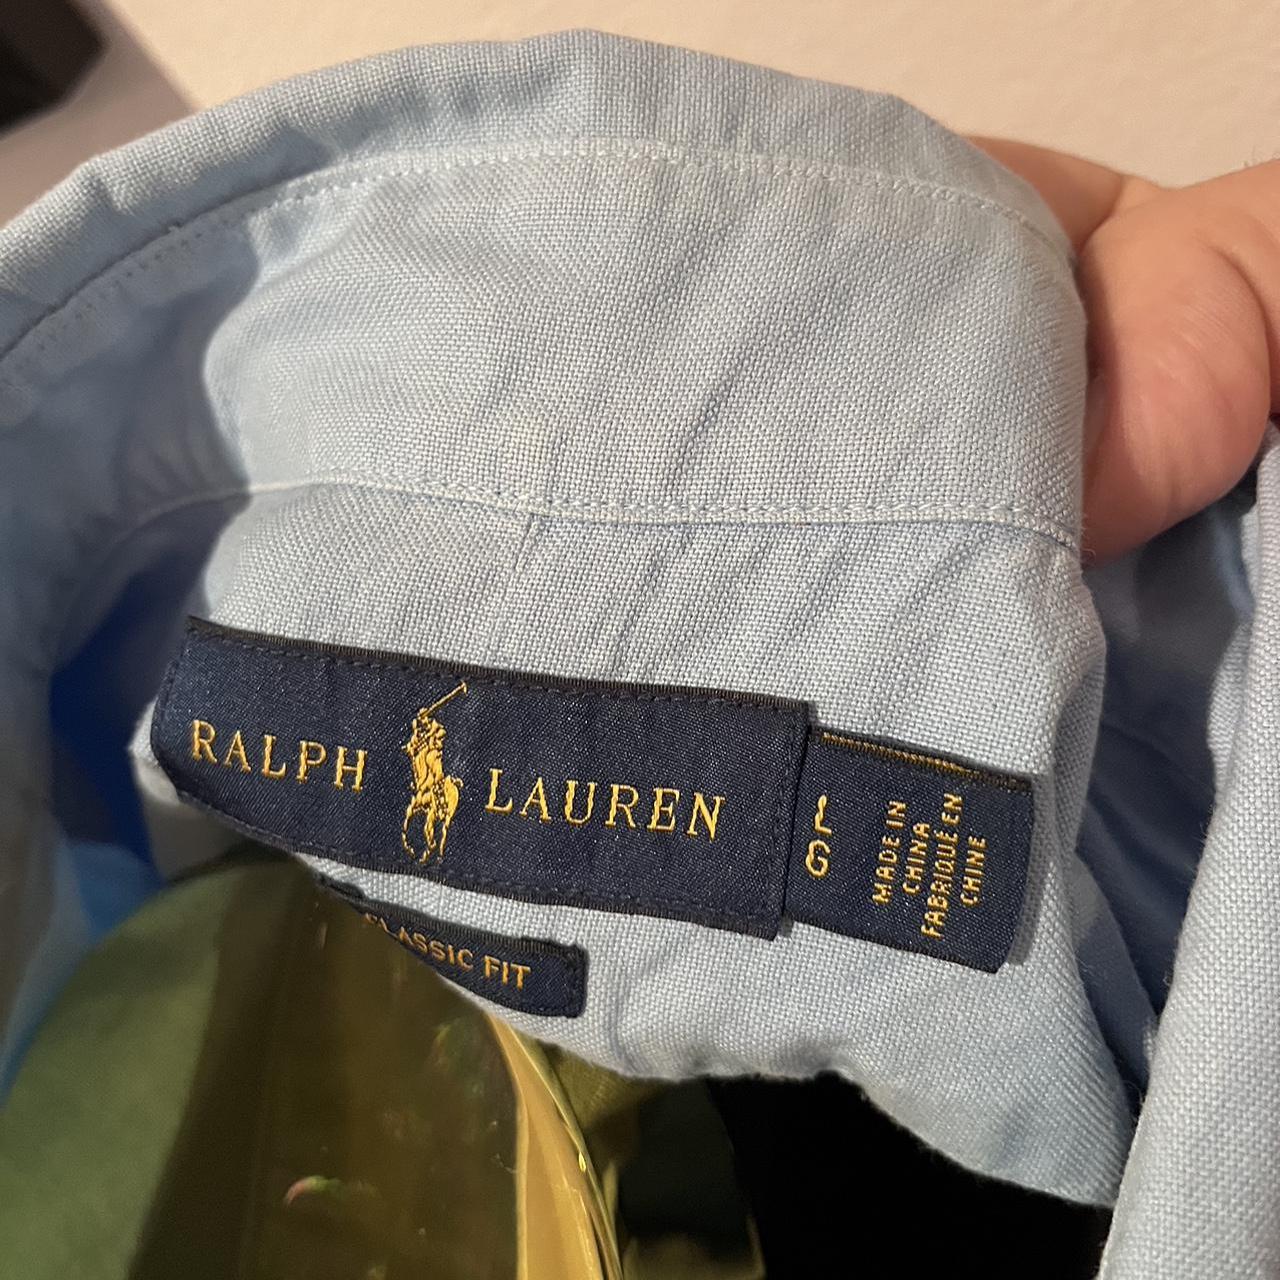 Ralph Lauren Polo Ralph Lauren 100% Cotton Pastel Blue Shirt Size Large Button Down Collar